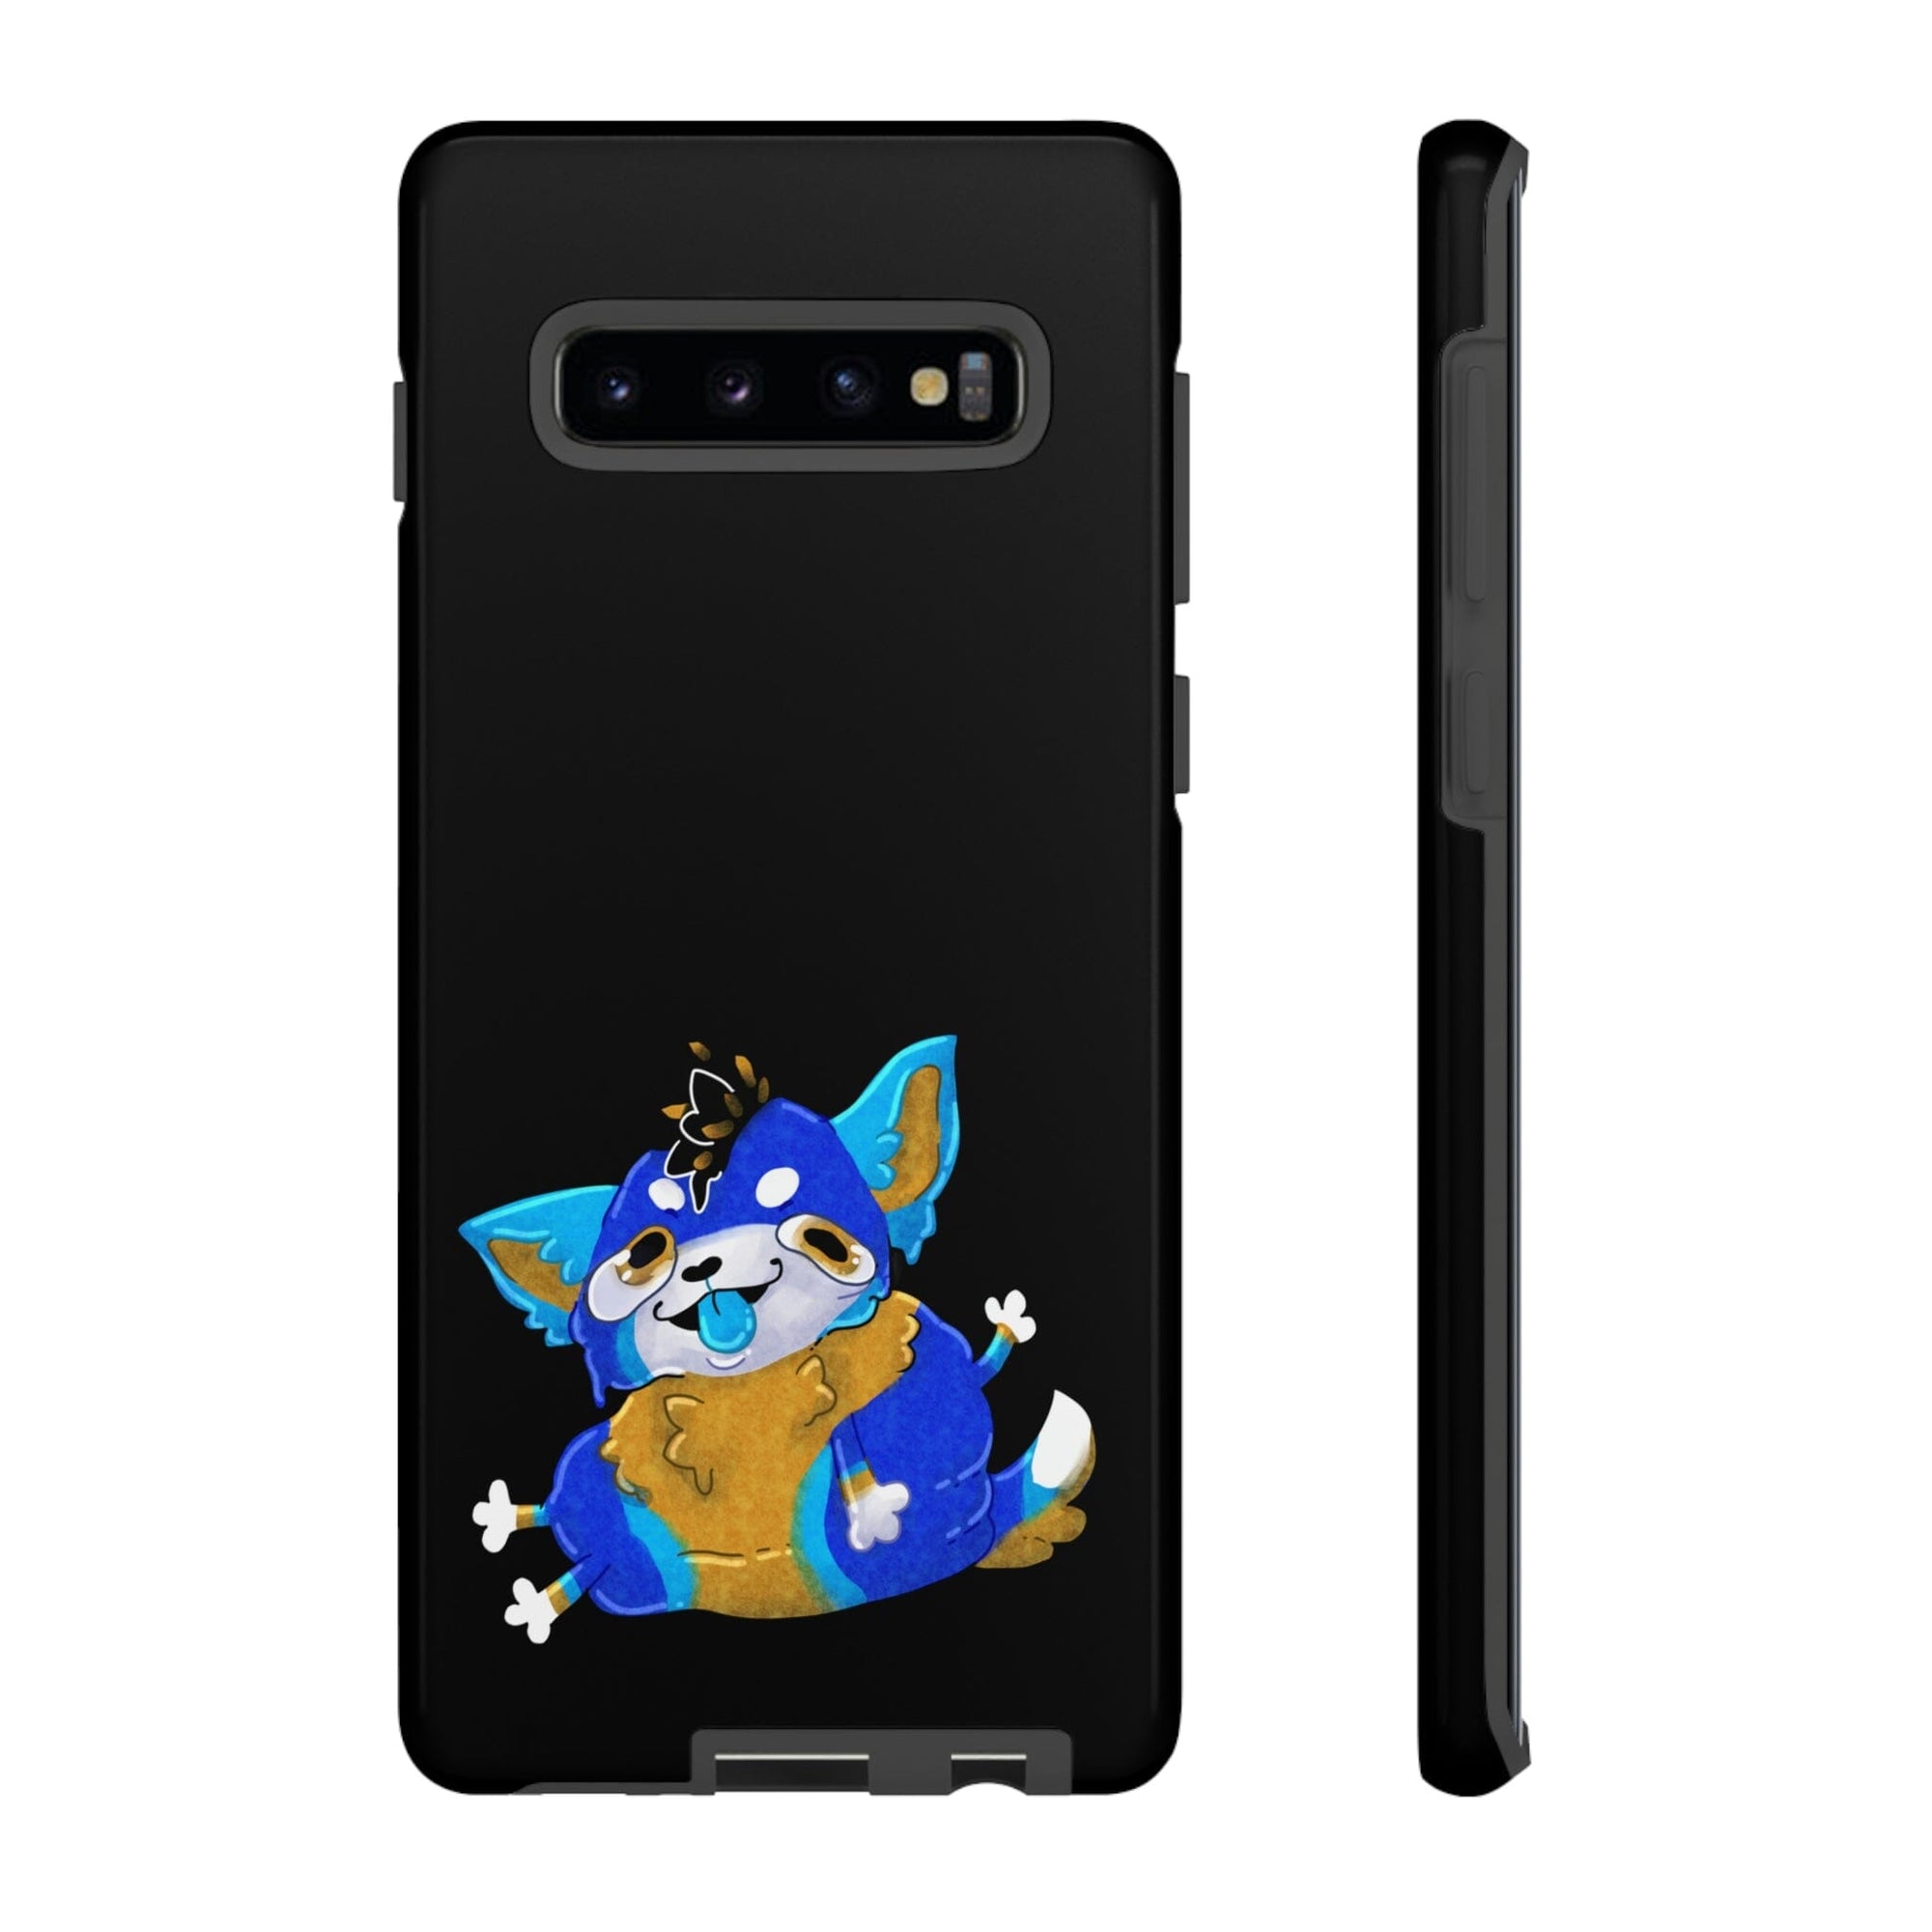 Hund The Hound - Hunderbaked - Phone Case Phone Case Printify Samsung Galaxy S10 Plus Glossy 